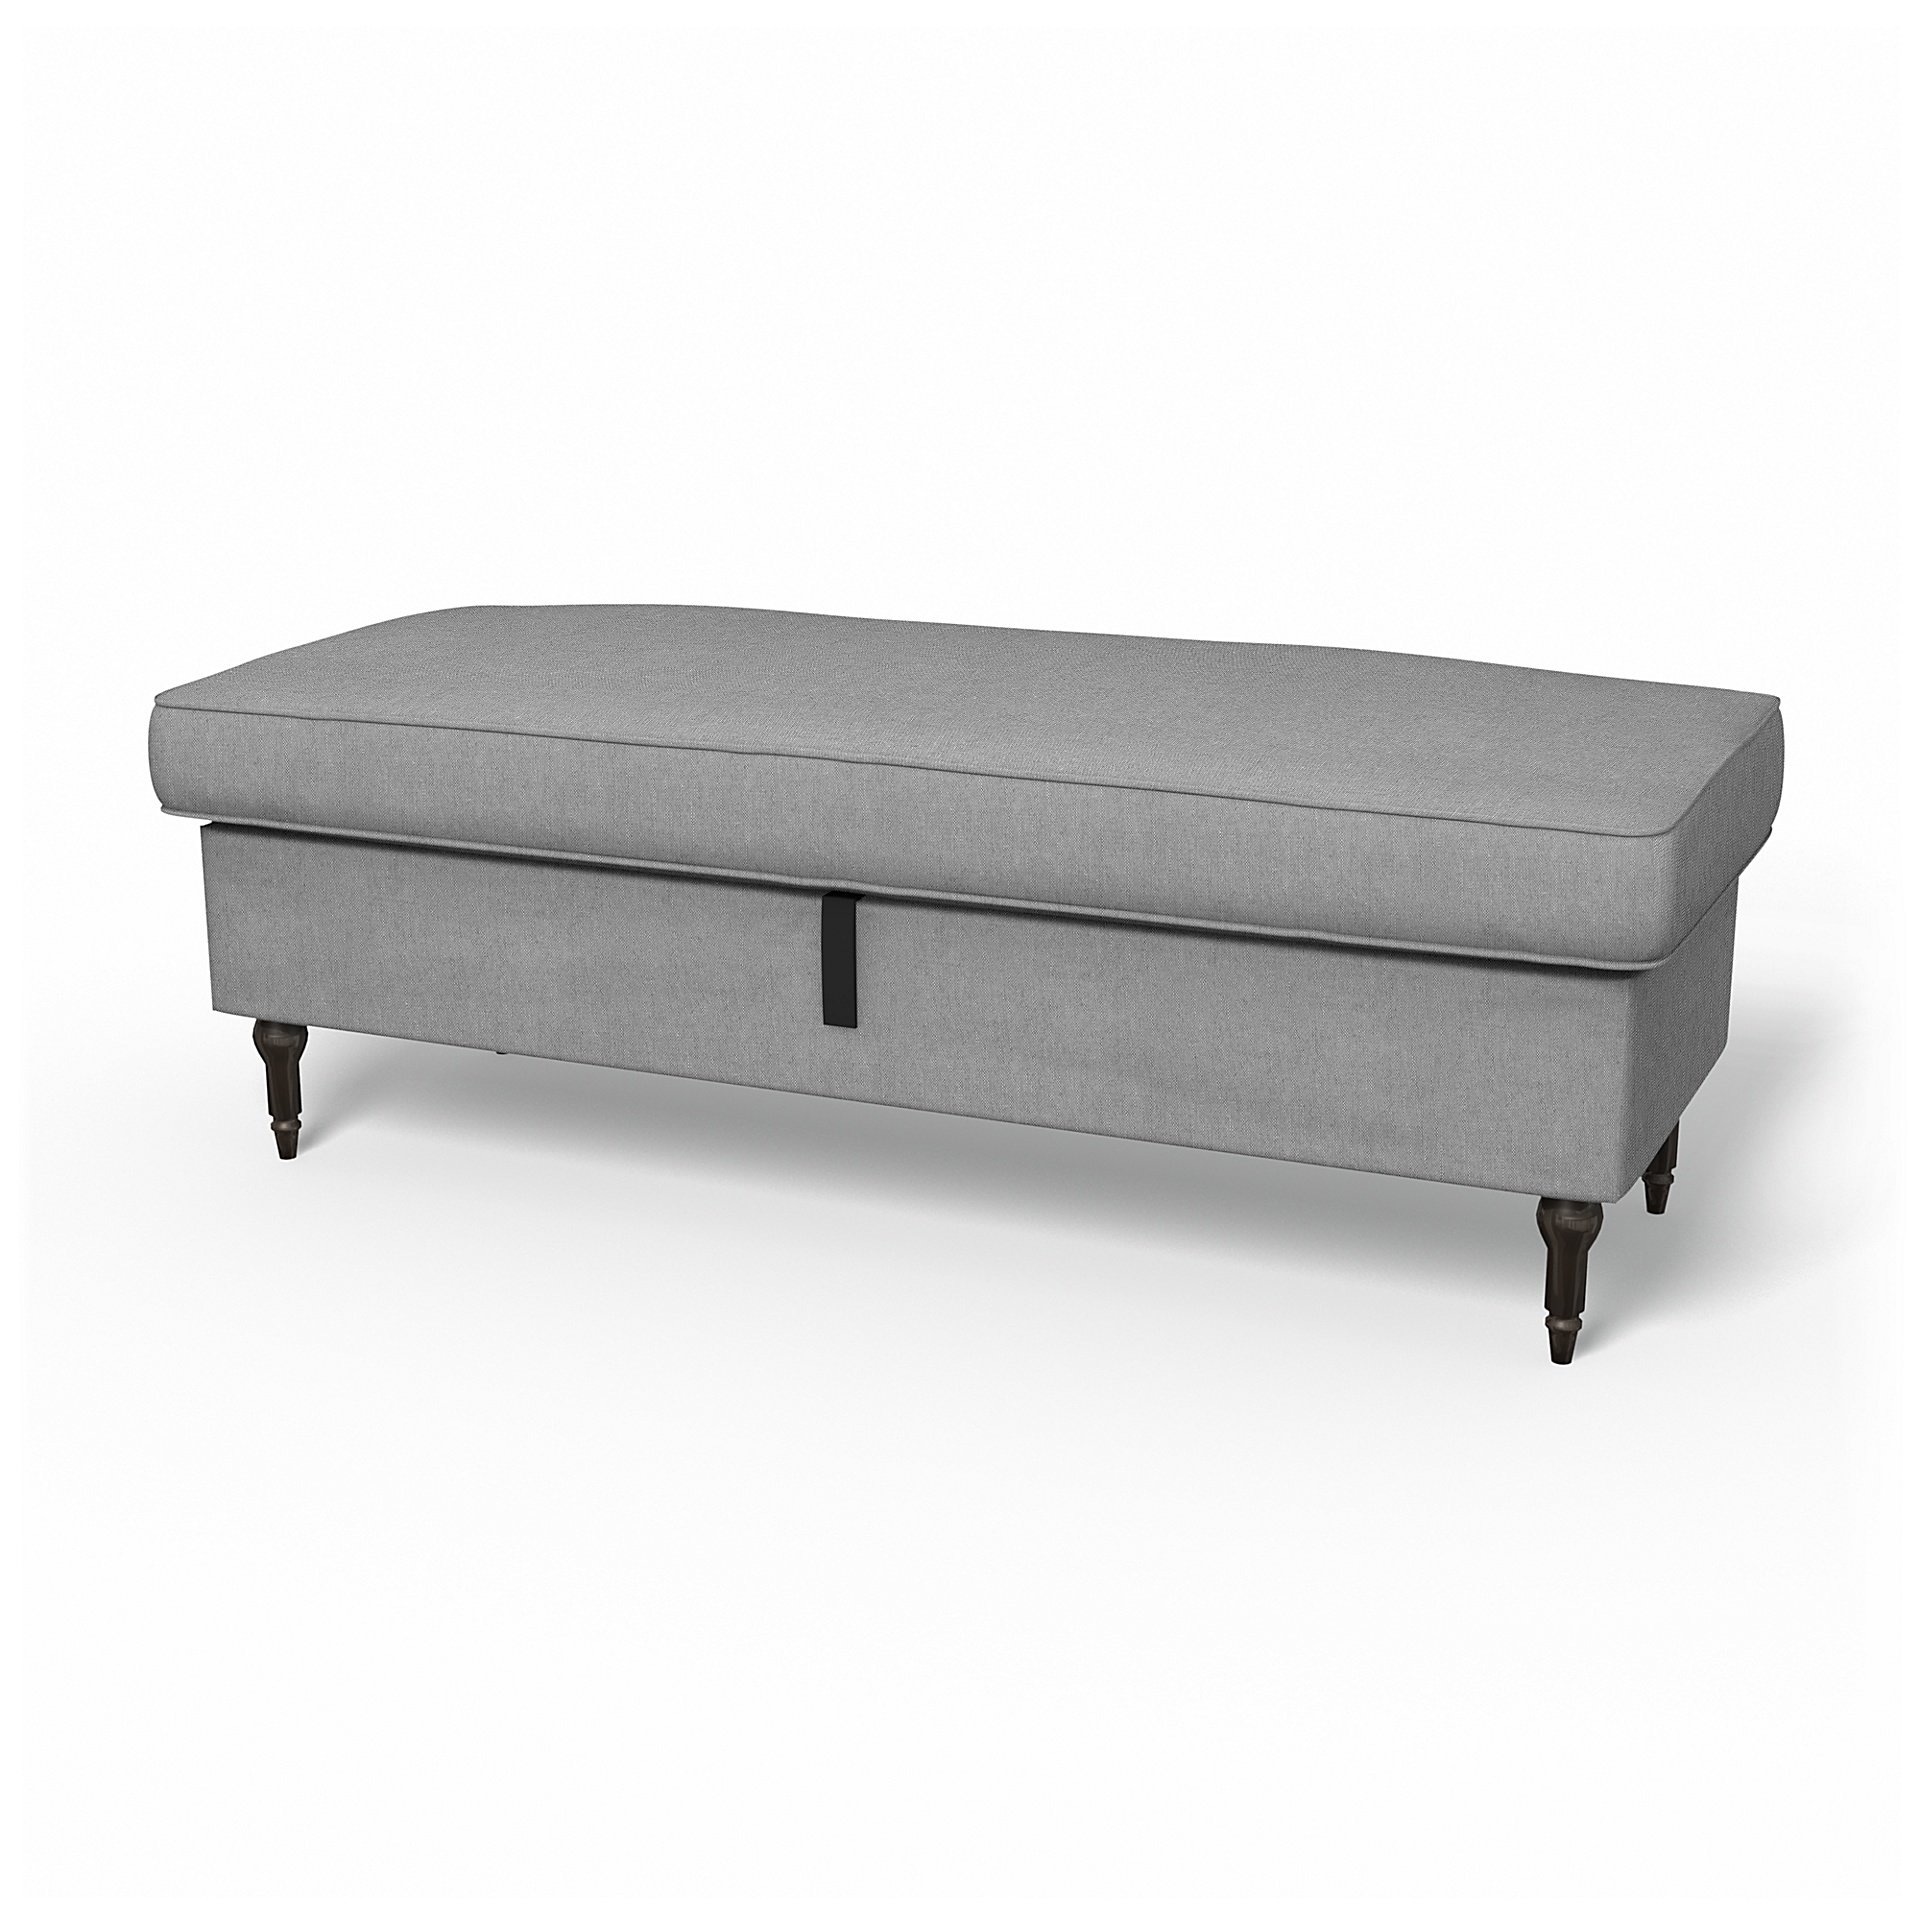 IKEA - Stocksund Bench Cover, Graphite, Linen - Bemz